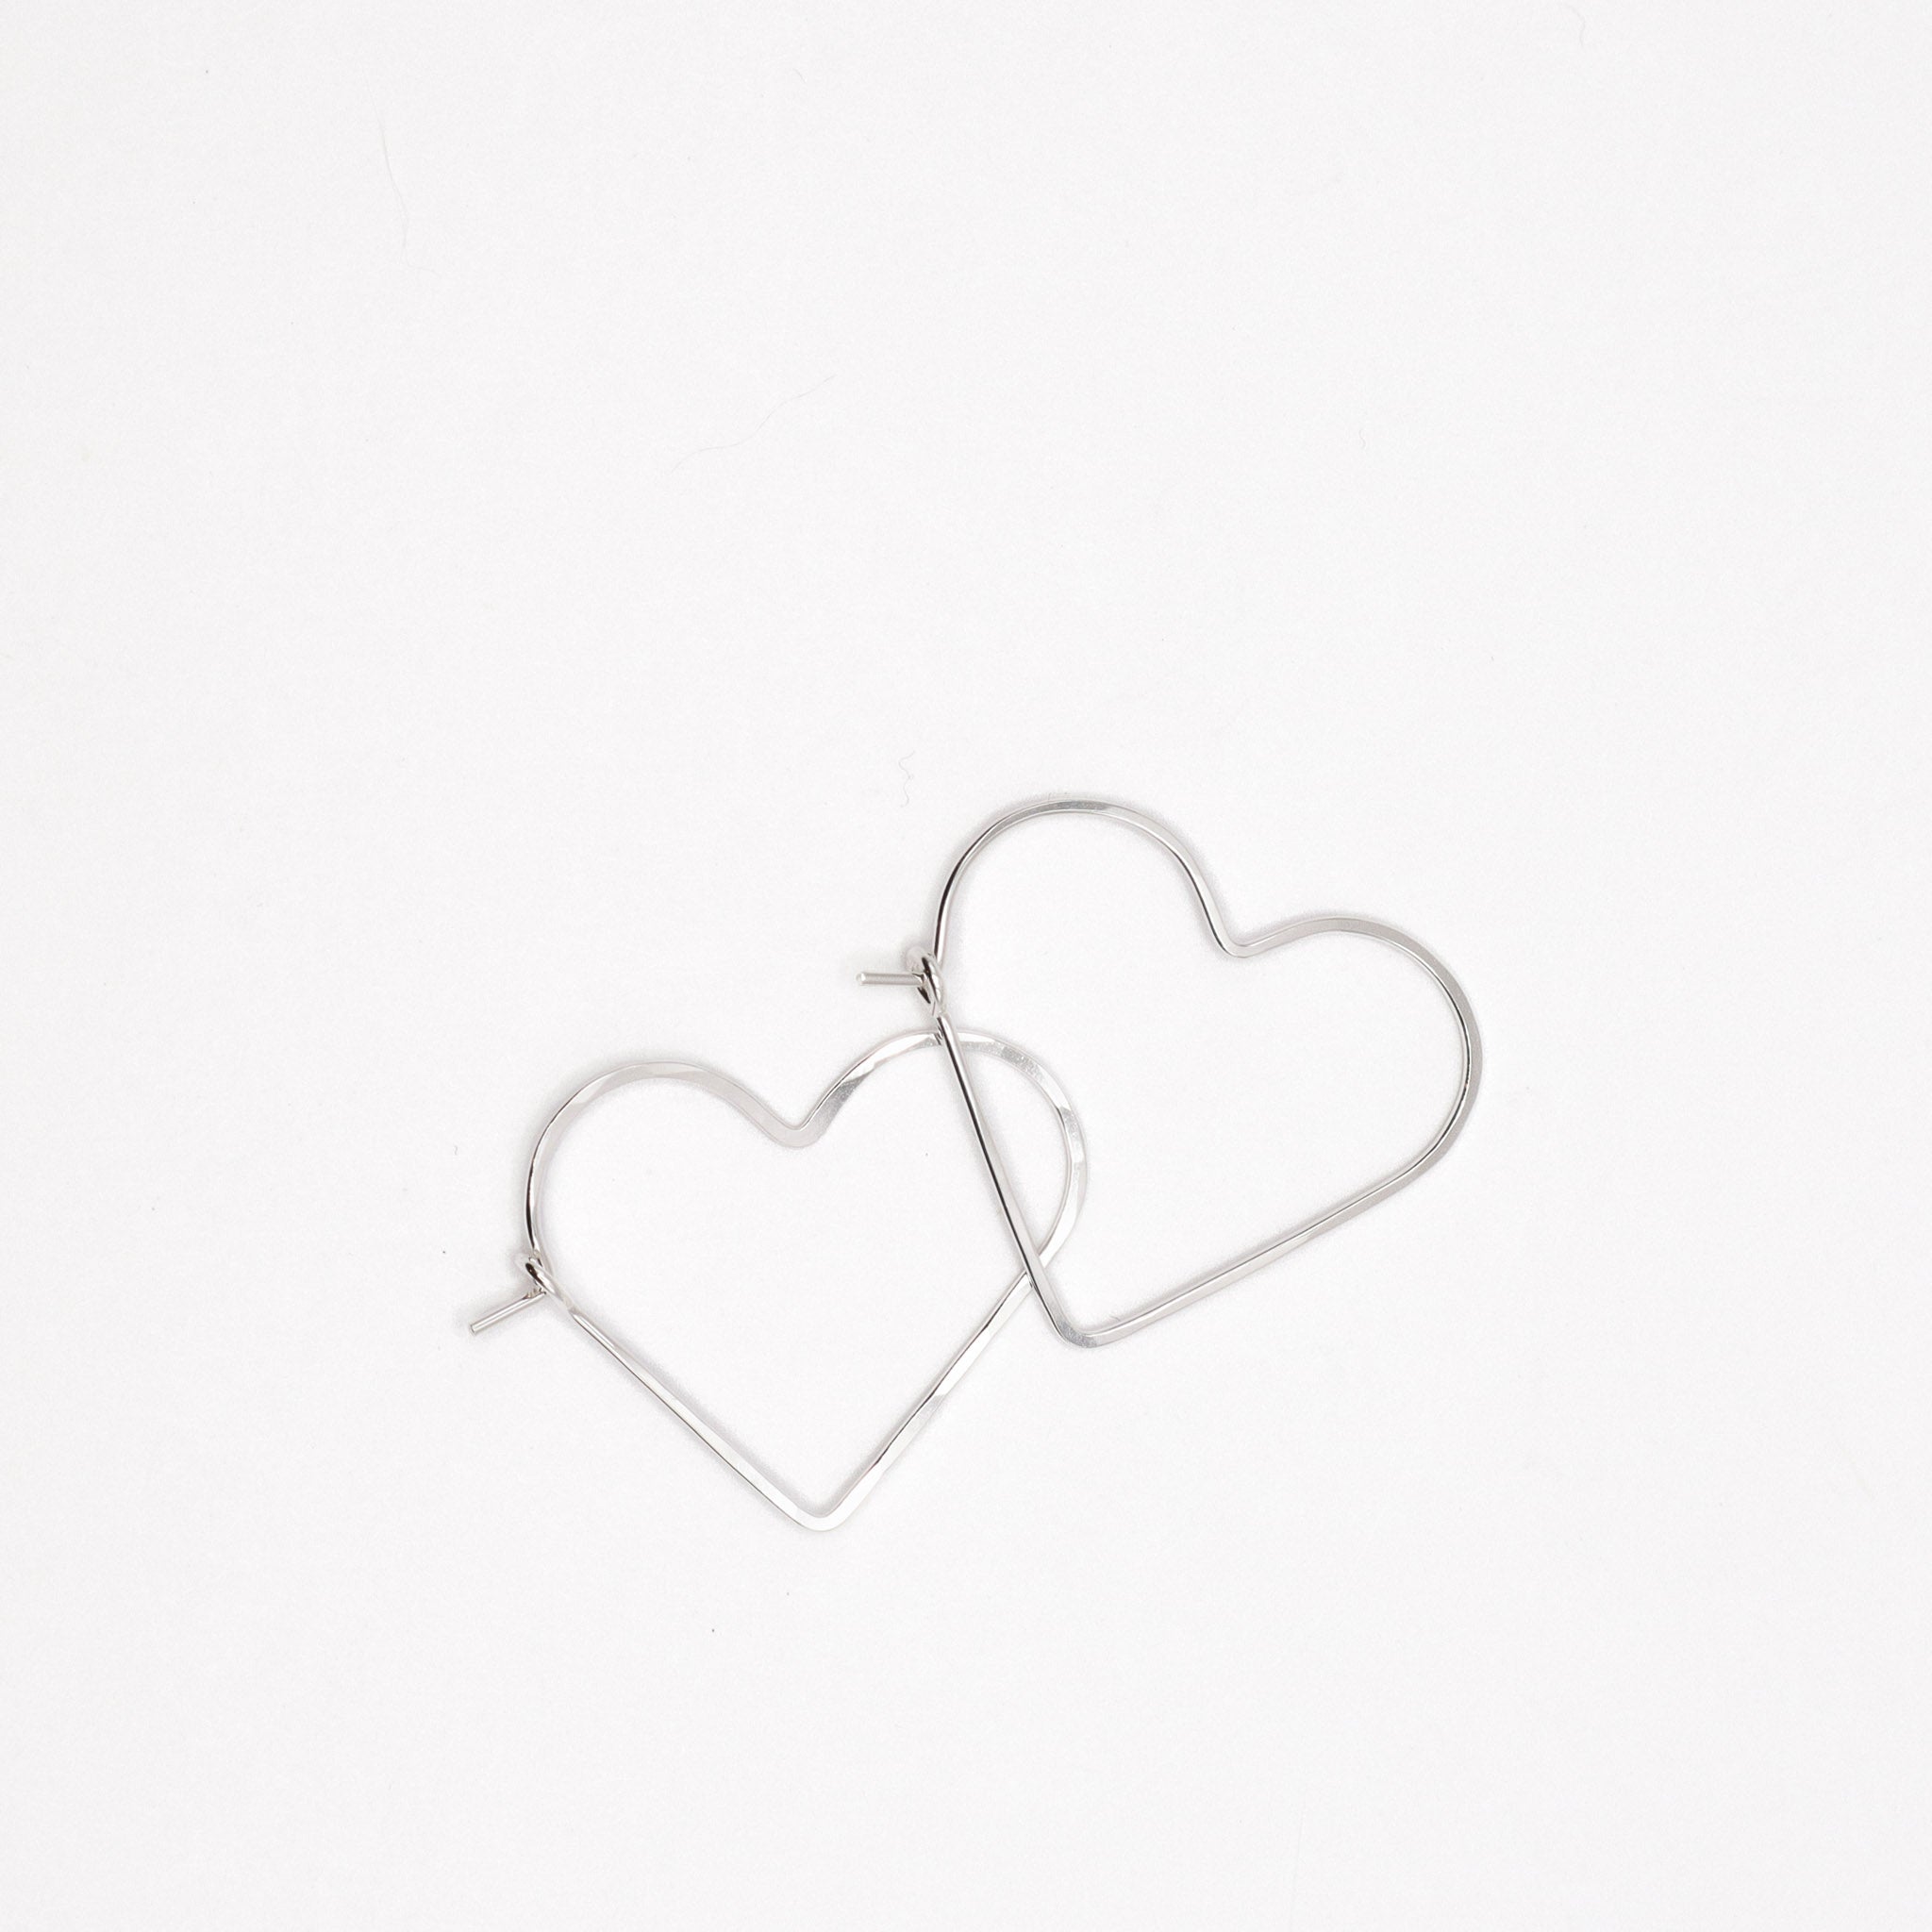 Petite Silver Heart Hoop Earrings, featured image